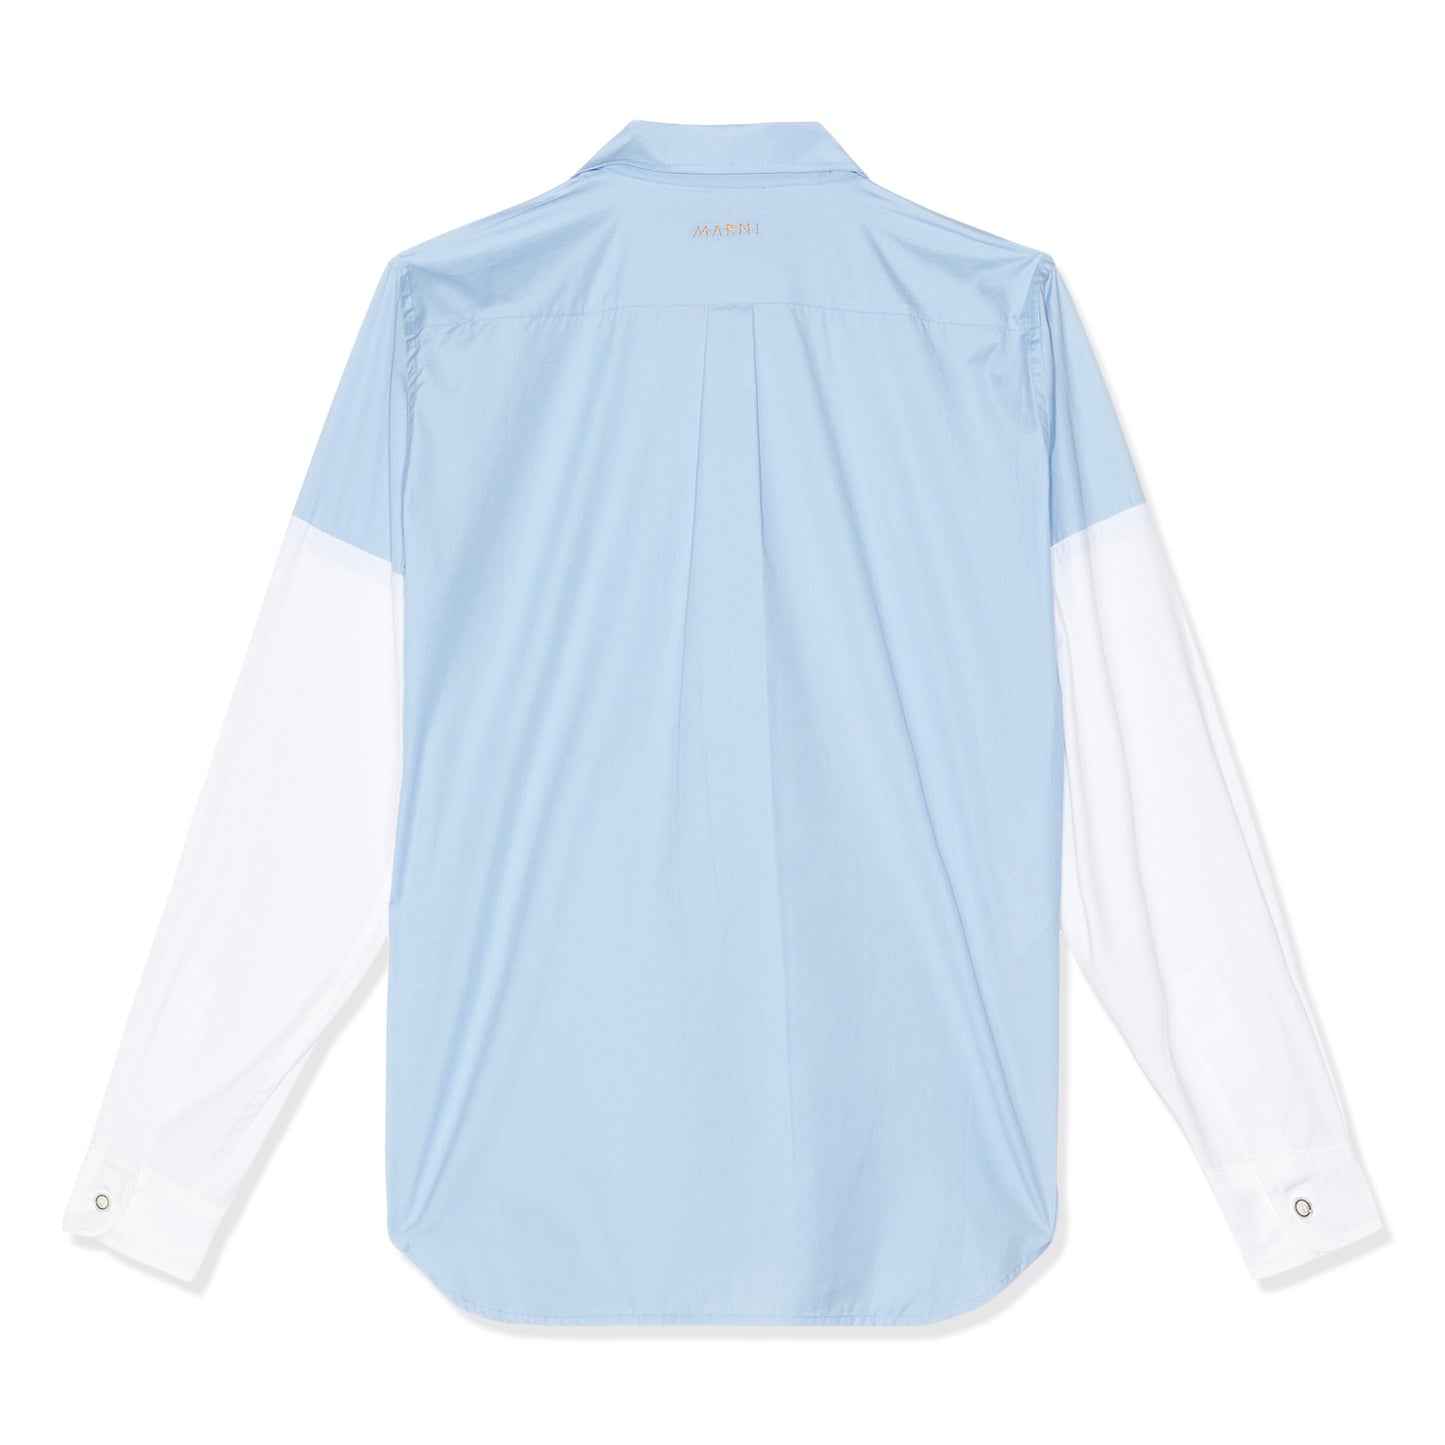 MARNI Cotton Shirt (Iris Blue)